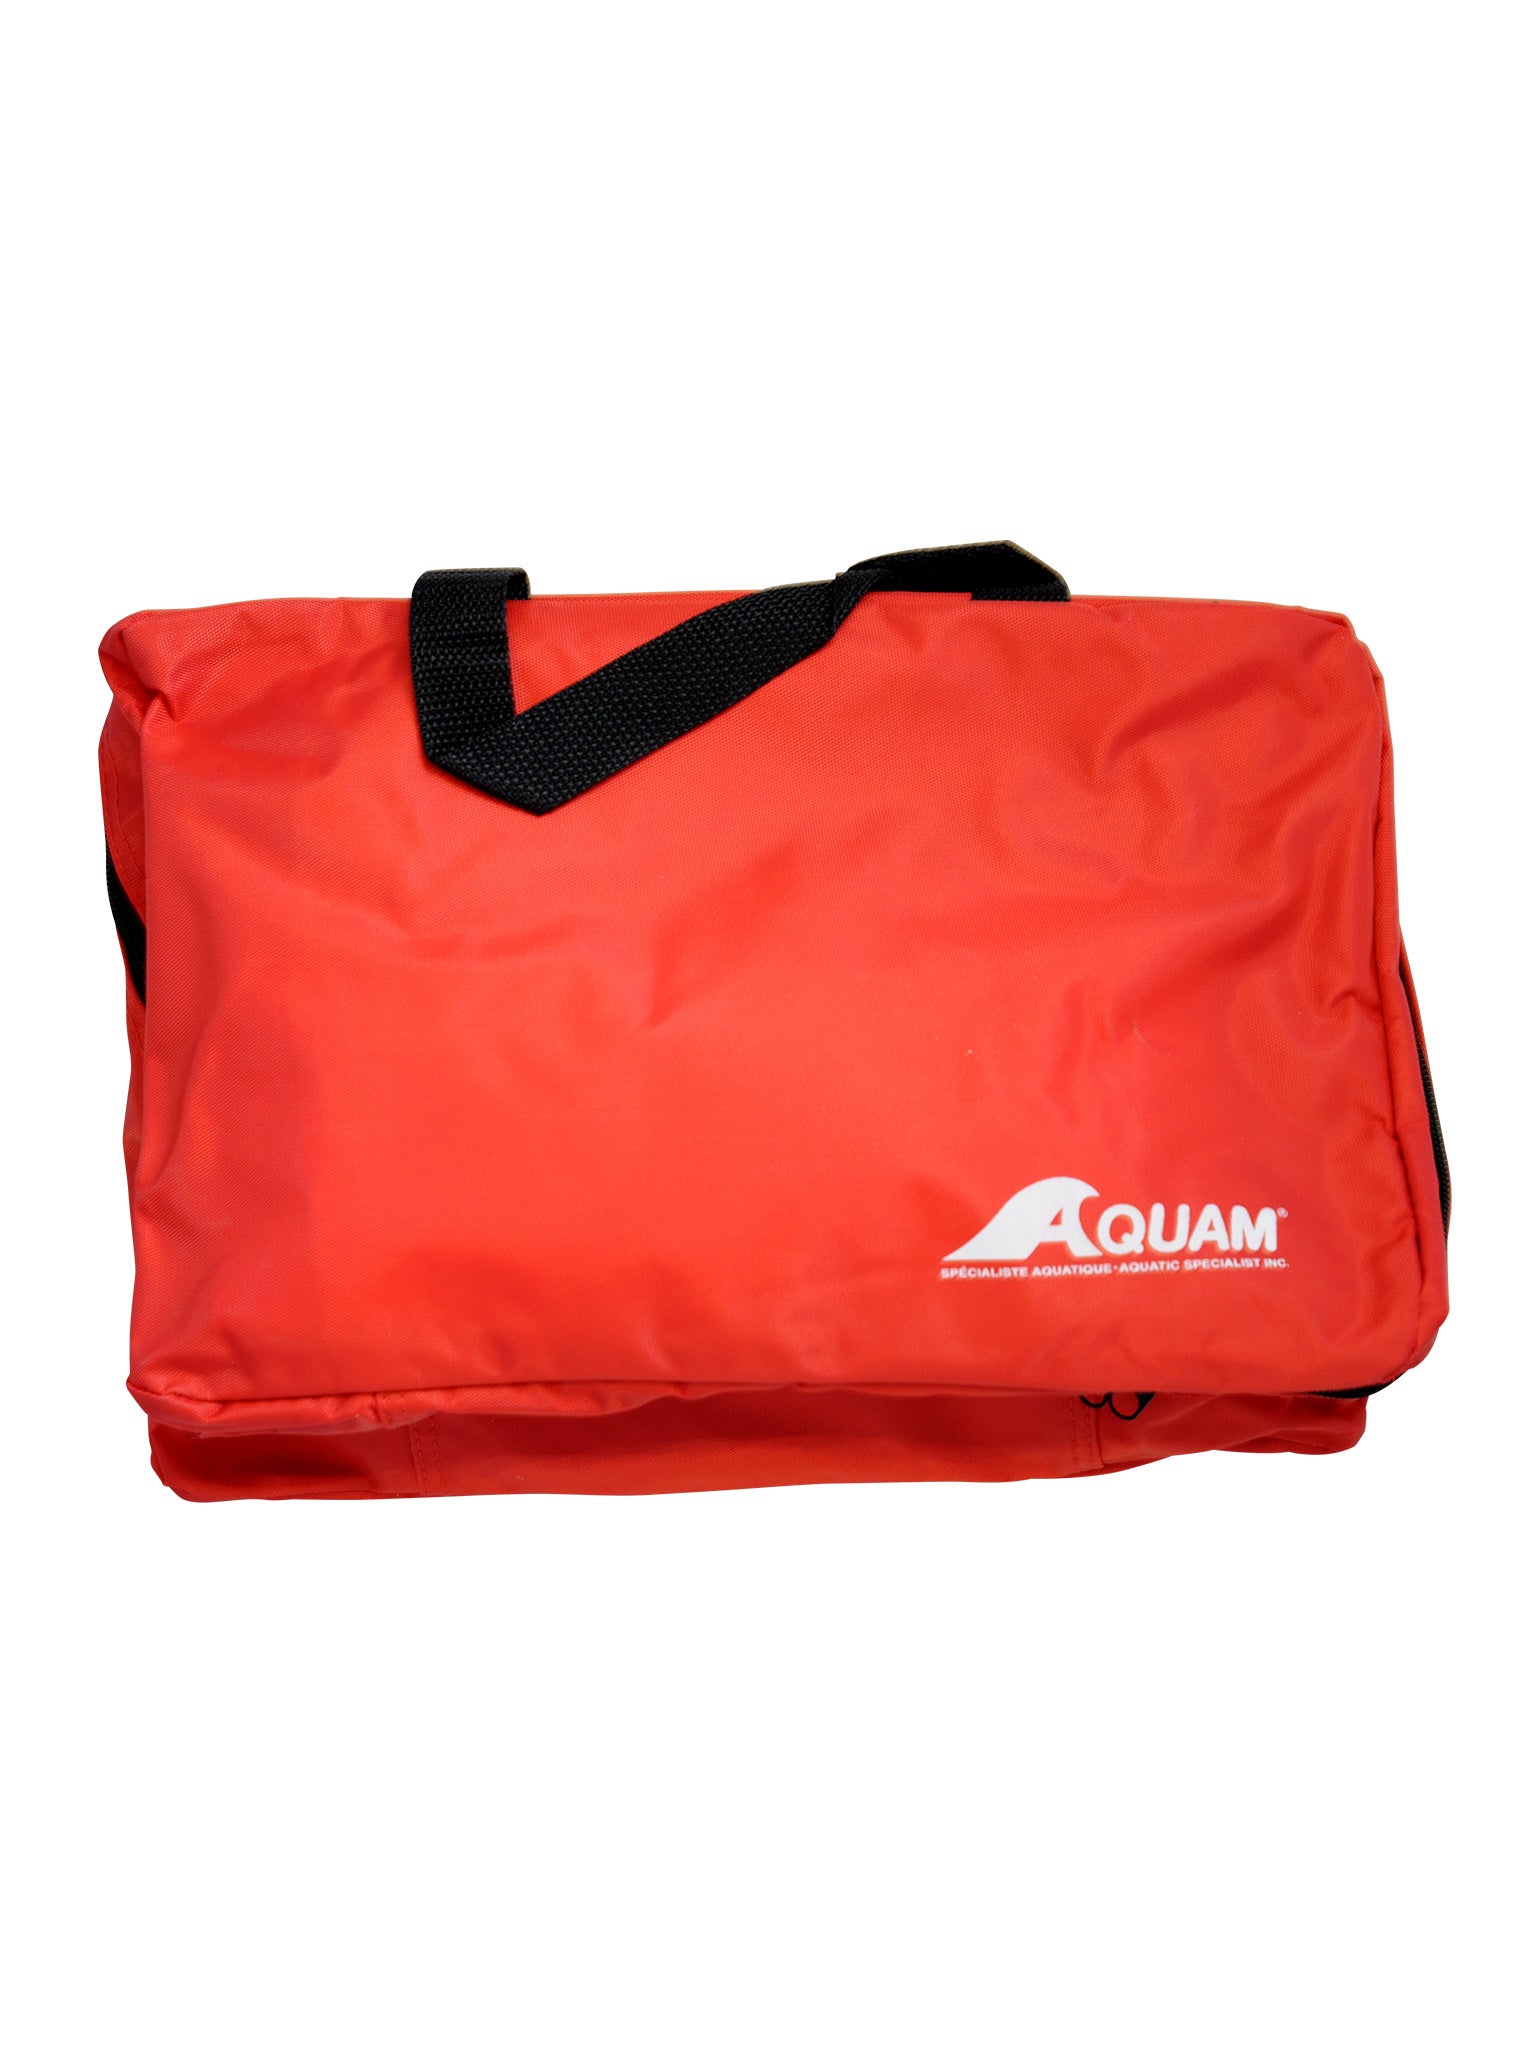 Lifeguard First-Aid Kit